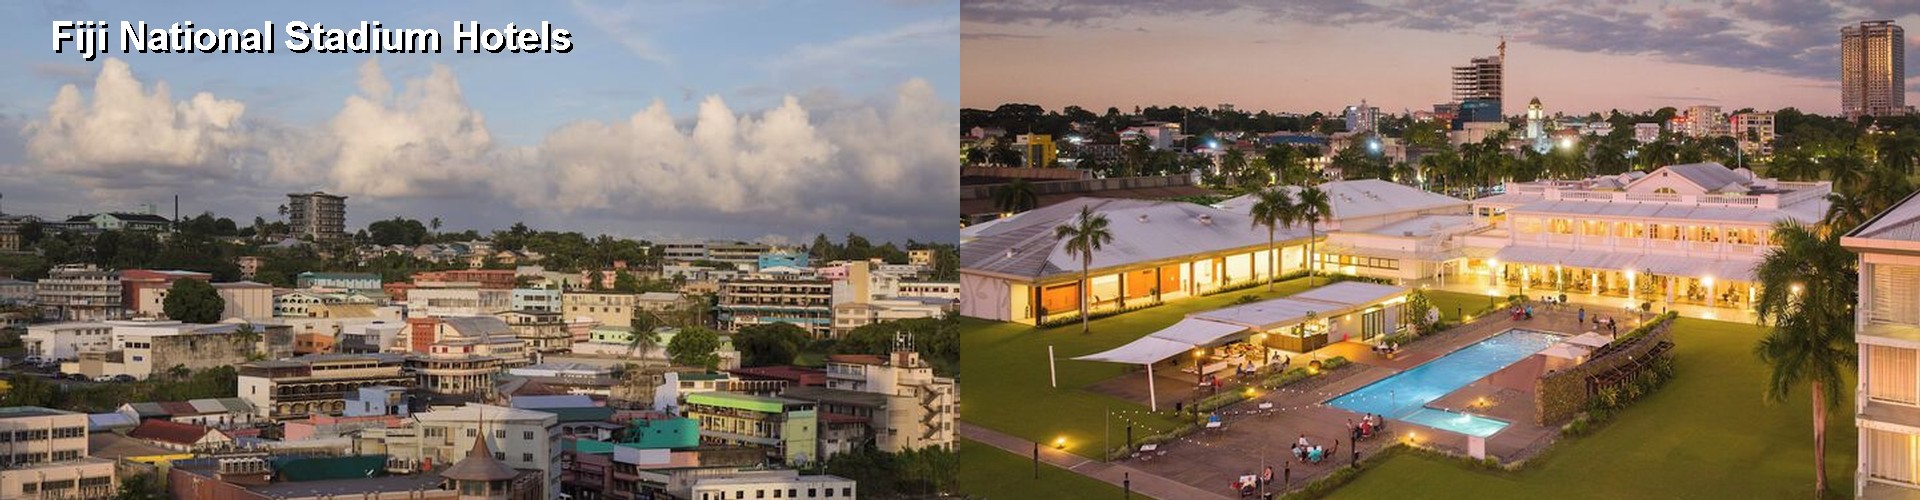 3 Best Hotels near Fiji National Stadium